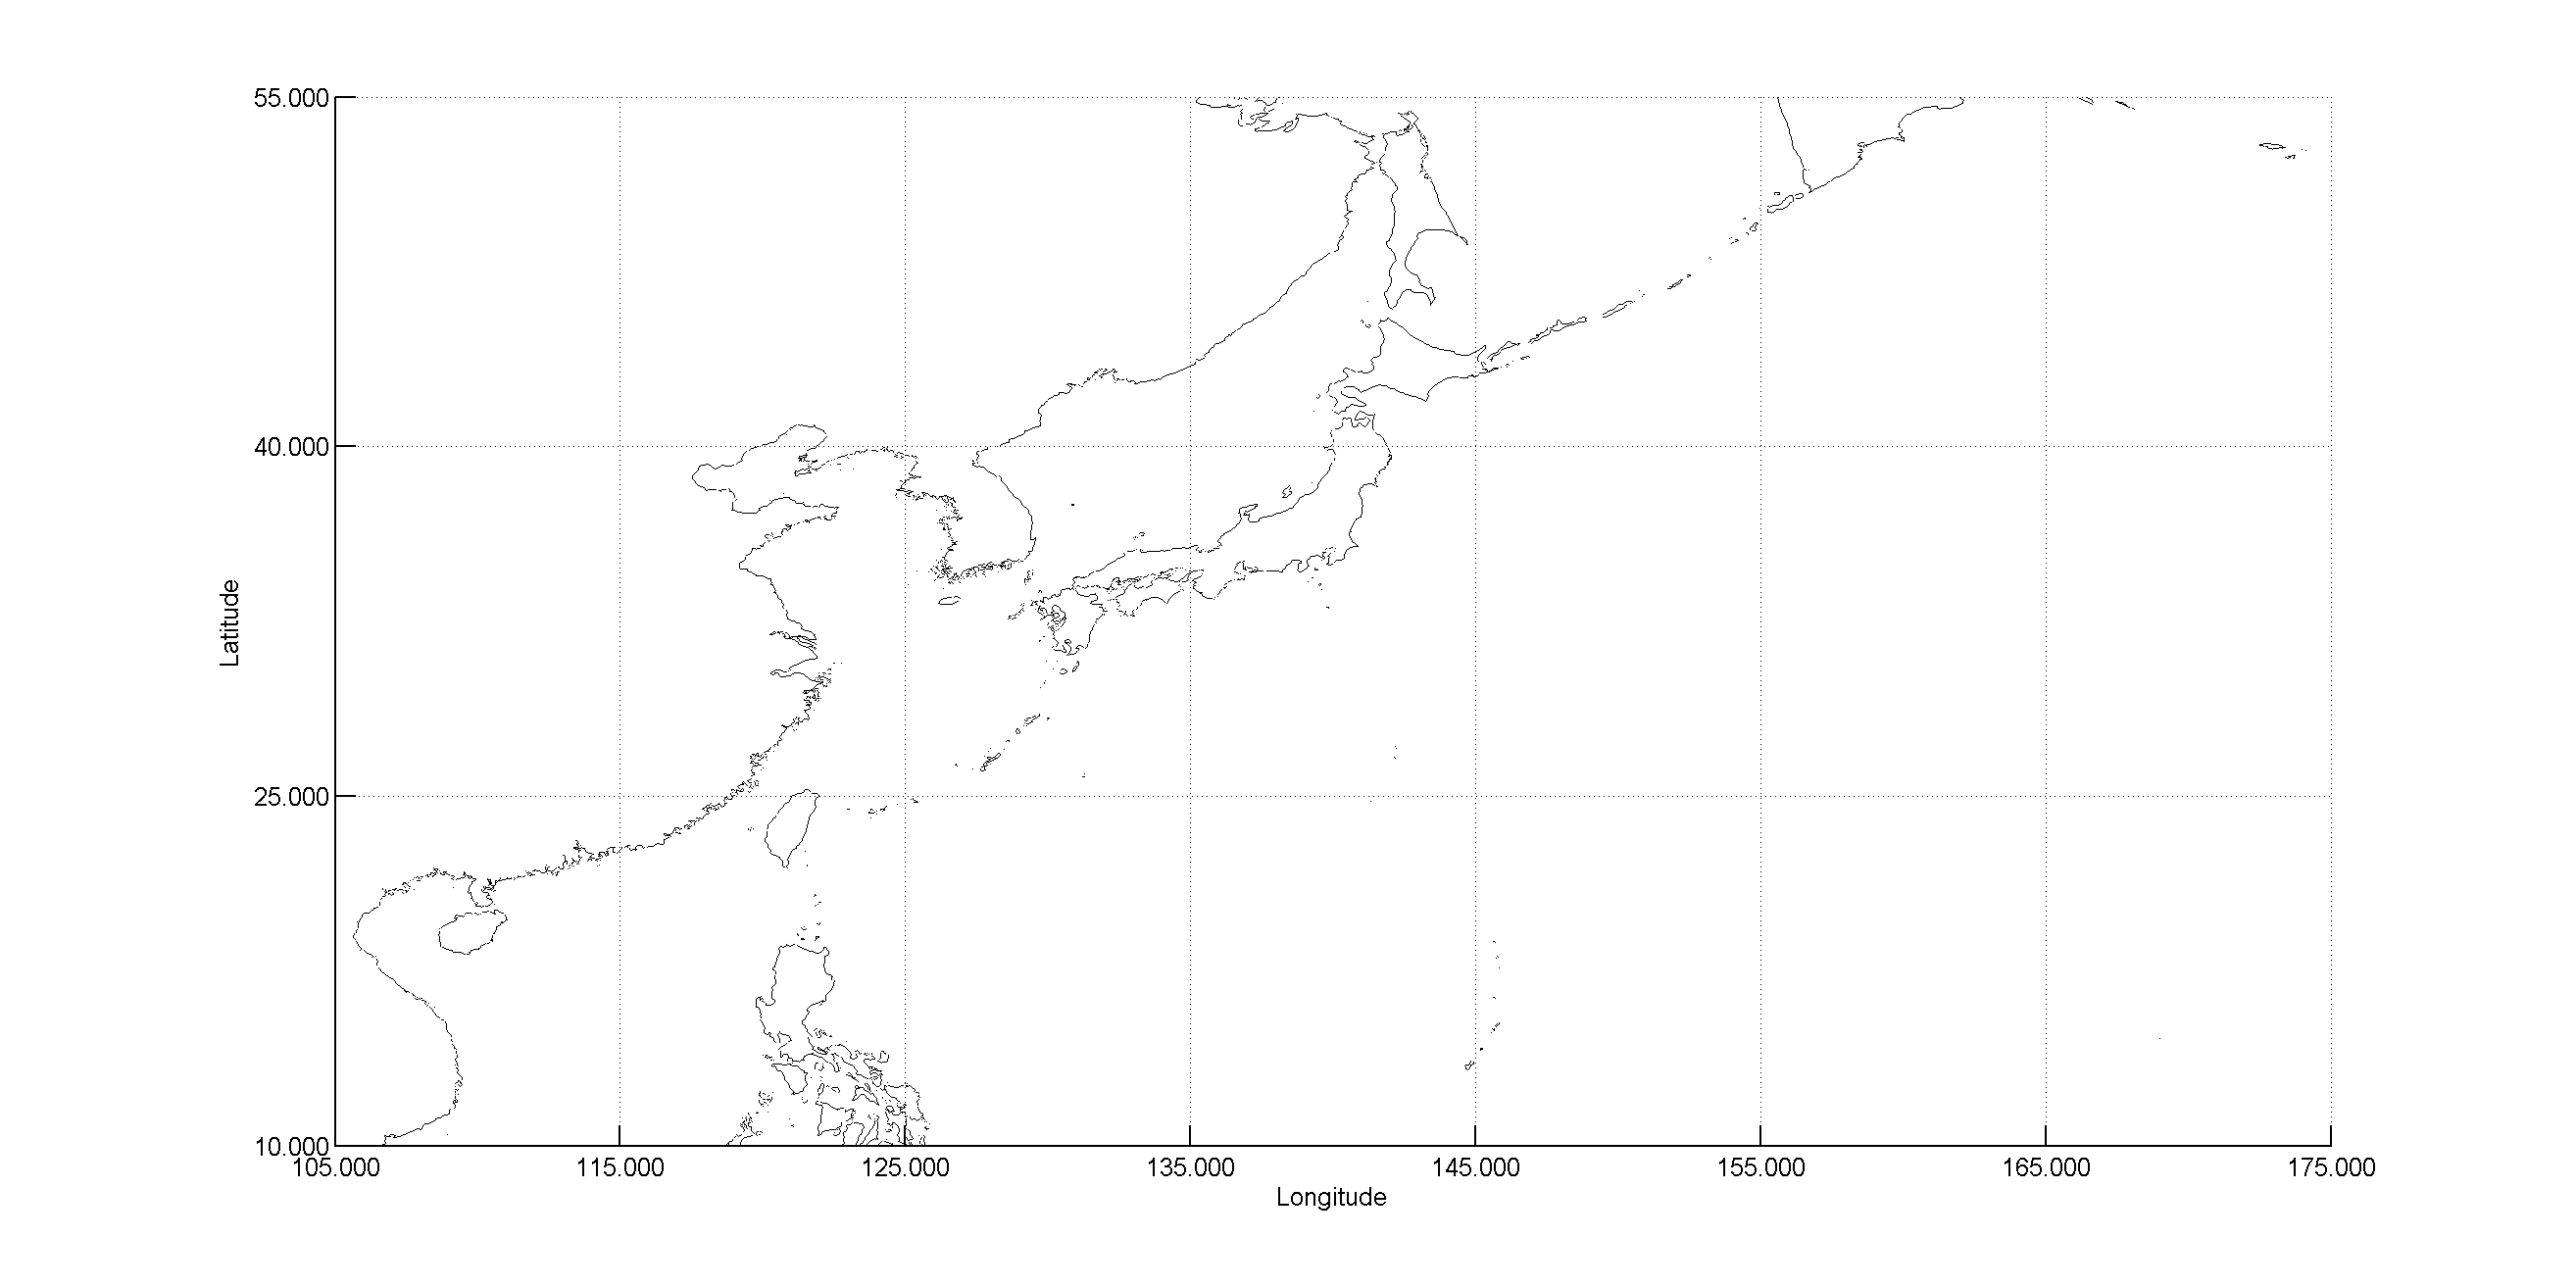 CYCLE_143 - Japan Ascending passes